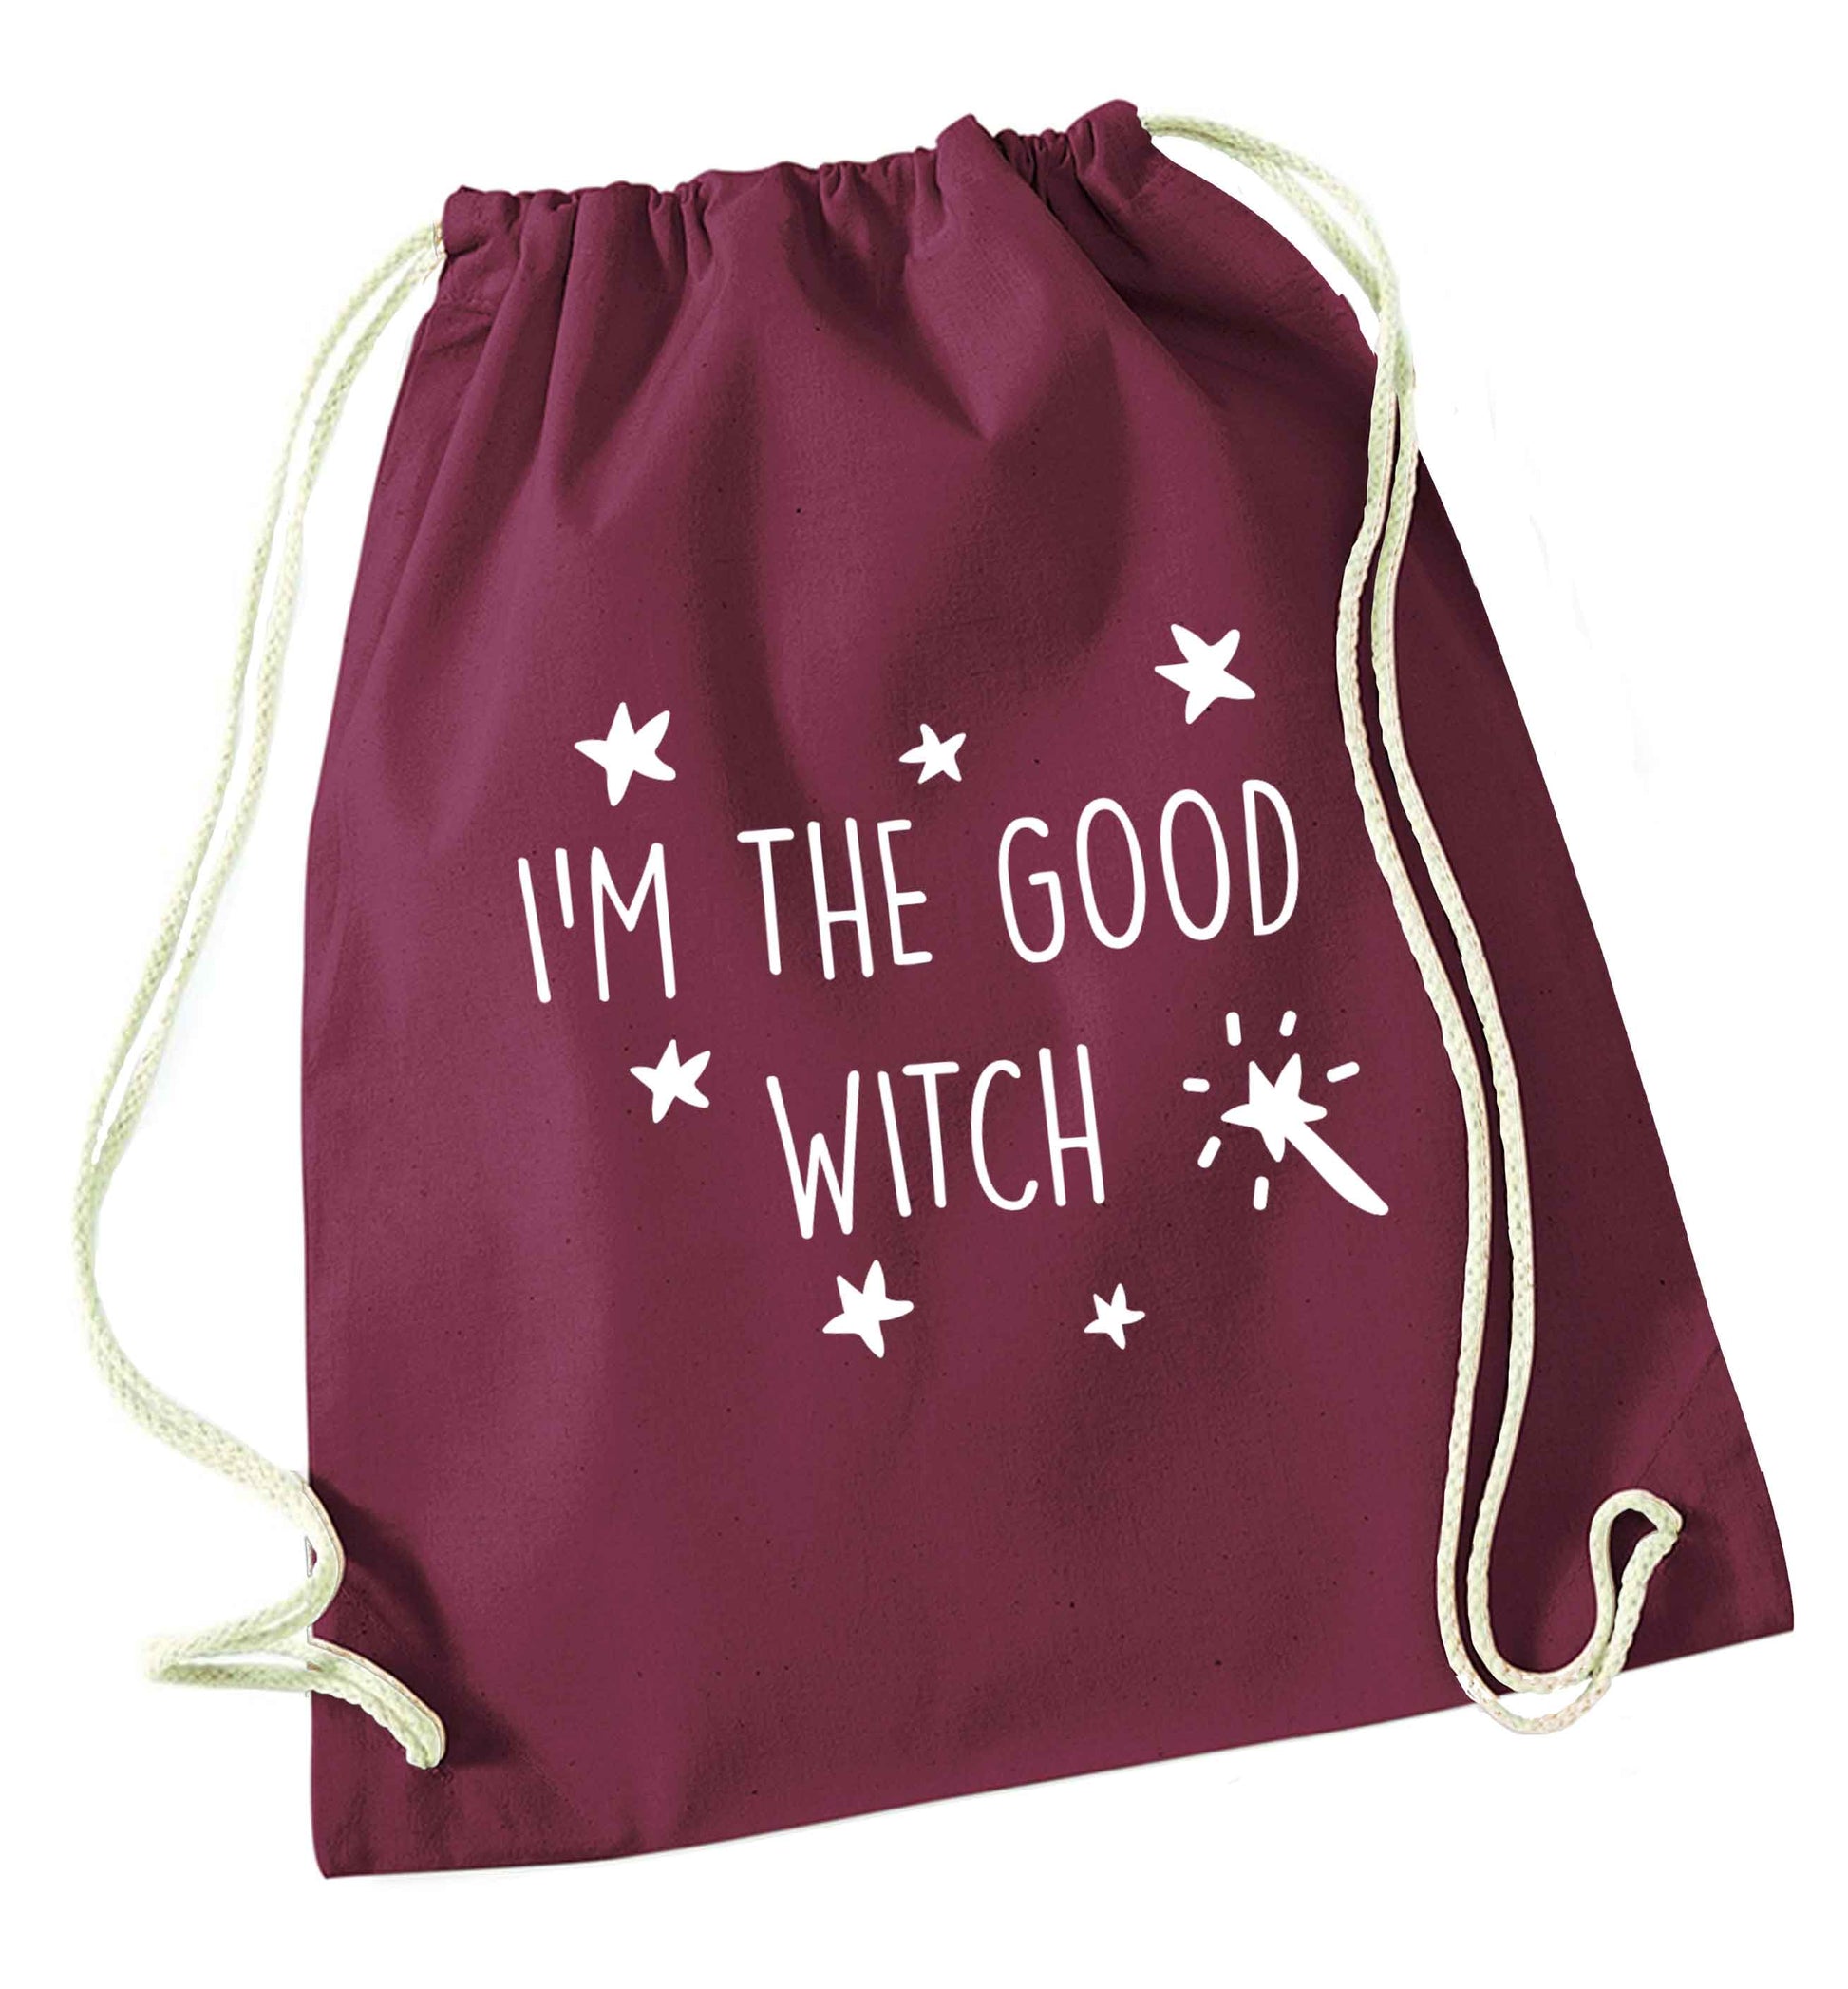 Good witch maroon drawstring bag